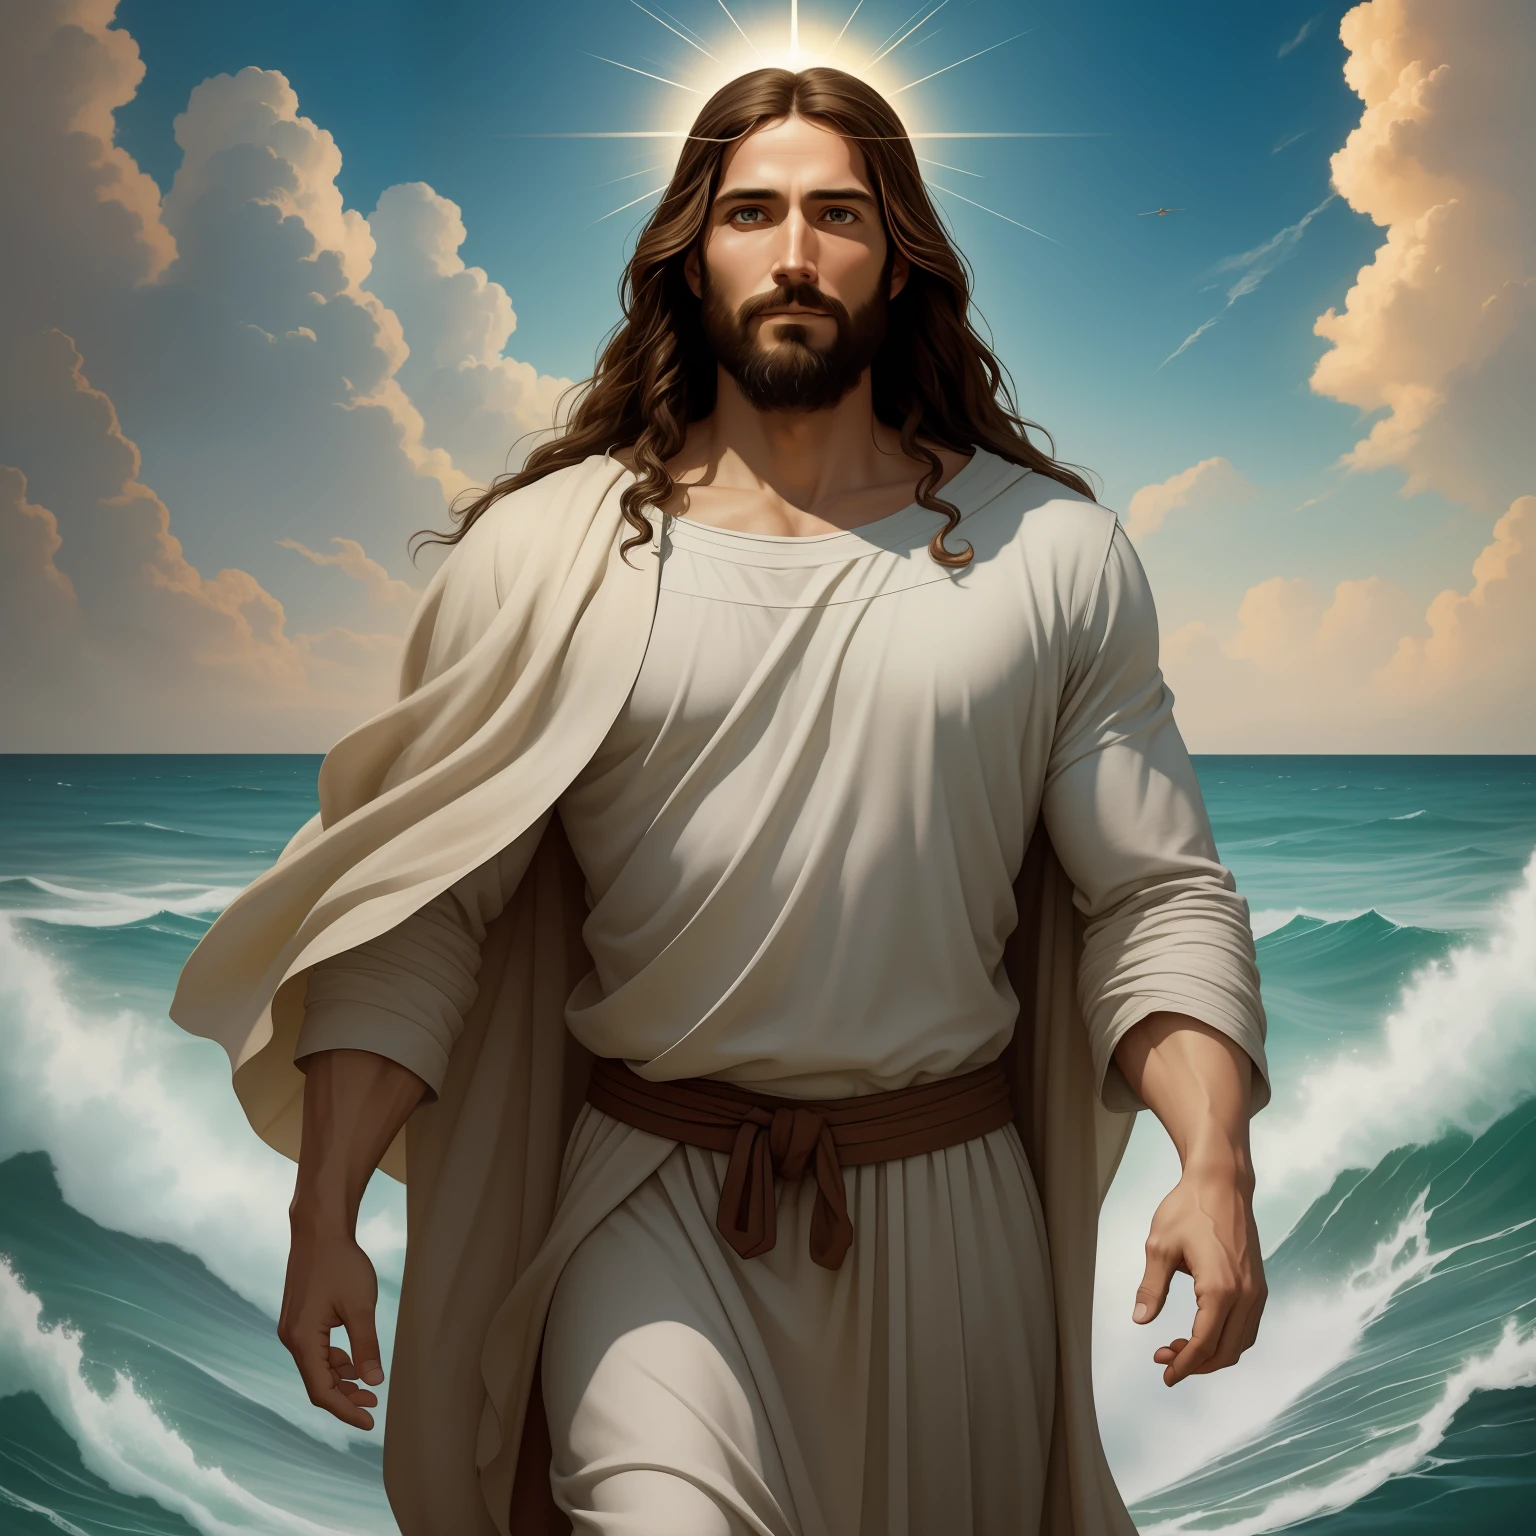 A beautiful ultra-thin 實際的 portrait of Jesus, 先知, 一名男子 35 歲 希伯來文 黑髮, 棕色短发, 長長的棕色鬍子, 和, 幫助人們 , 穿著胸部封閉的長亞麻外衣, 在前視圖中, 全身, 聖經的, 實際的,迭戈·委拉斯開茲,彼得·保羅·魯本斯,林布蘭,亞歷克斯·羅斯,8K, 概念藝術, Photo實際的, 實際的,  插圖, 油畫, 超現實主義, Hyper實際的, 幫助人們 , 數位藝術, 風格, watercolorReal Jesus flying on sky 和 a flying cloud in the background, 耶穌在水上行走, 聖經的 illustration, epic 聖經的 representation, 迫使他逃離, 從海洋出來, ! 握在手上!, 下船, 海洋之神, 美麗的表現, 8K 3D Model, 實際的,
a 3D 實際的 of 耶穌 和 a halo in the sky, 耶穌 christ, 在天堂微笑, portrait of 耶穌 christ, 耶穌 face, 第35章 少年全能神, 天上神的肖像, 格雷格·奧爾森, gigachad 耶穌, 耶穌 of nazareth, 耶穌, 神的臉, 上帝看著我, 他正在熱情地跟你打招呼, 他很高興, 头像图片